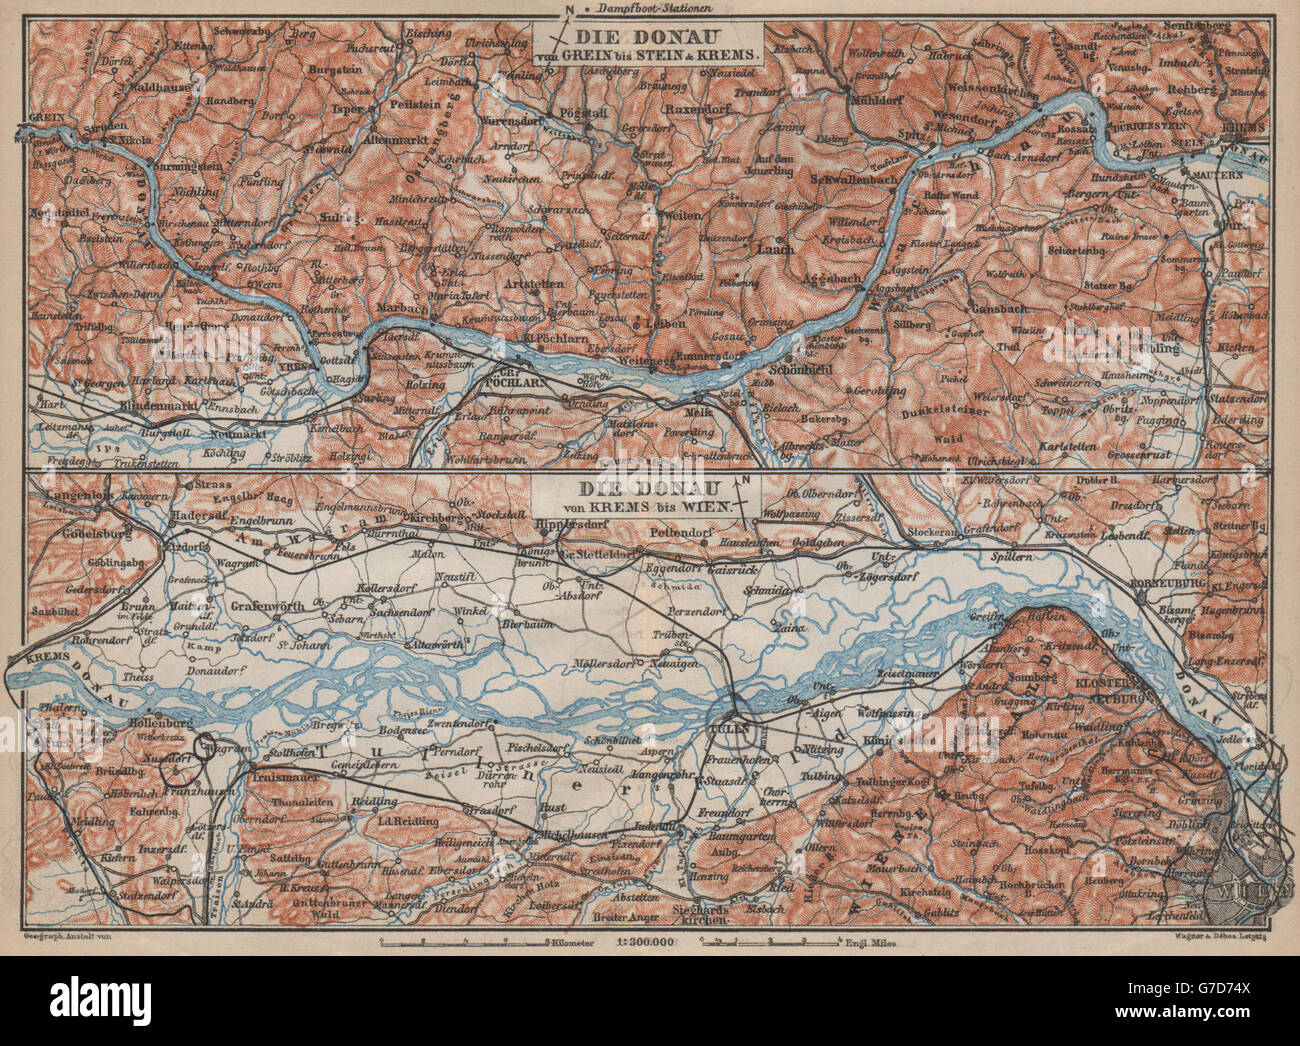 DANUBE DONAU RIVER. Grein-Ybbs-Pochlarn-Melk-Spitz-Krems. Austria, 1905 map Stock Photo